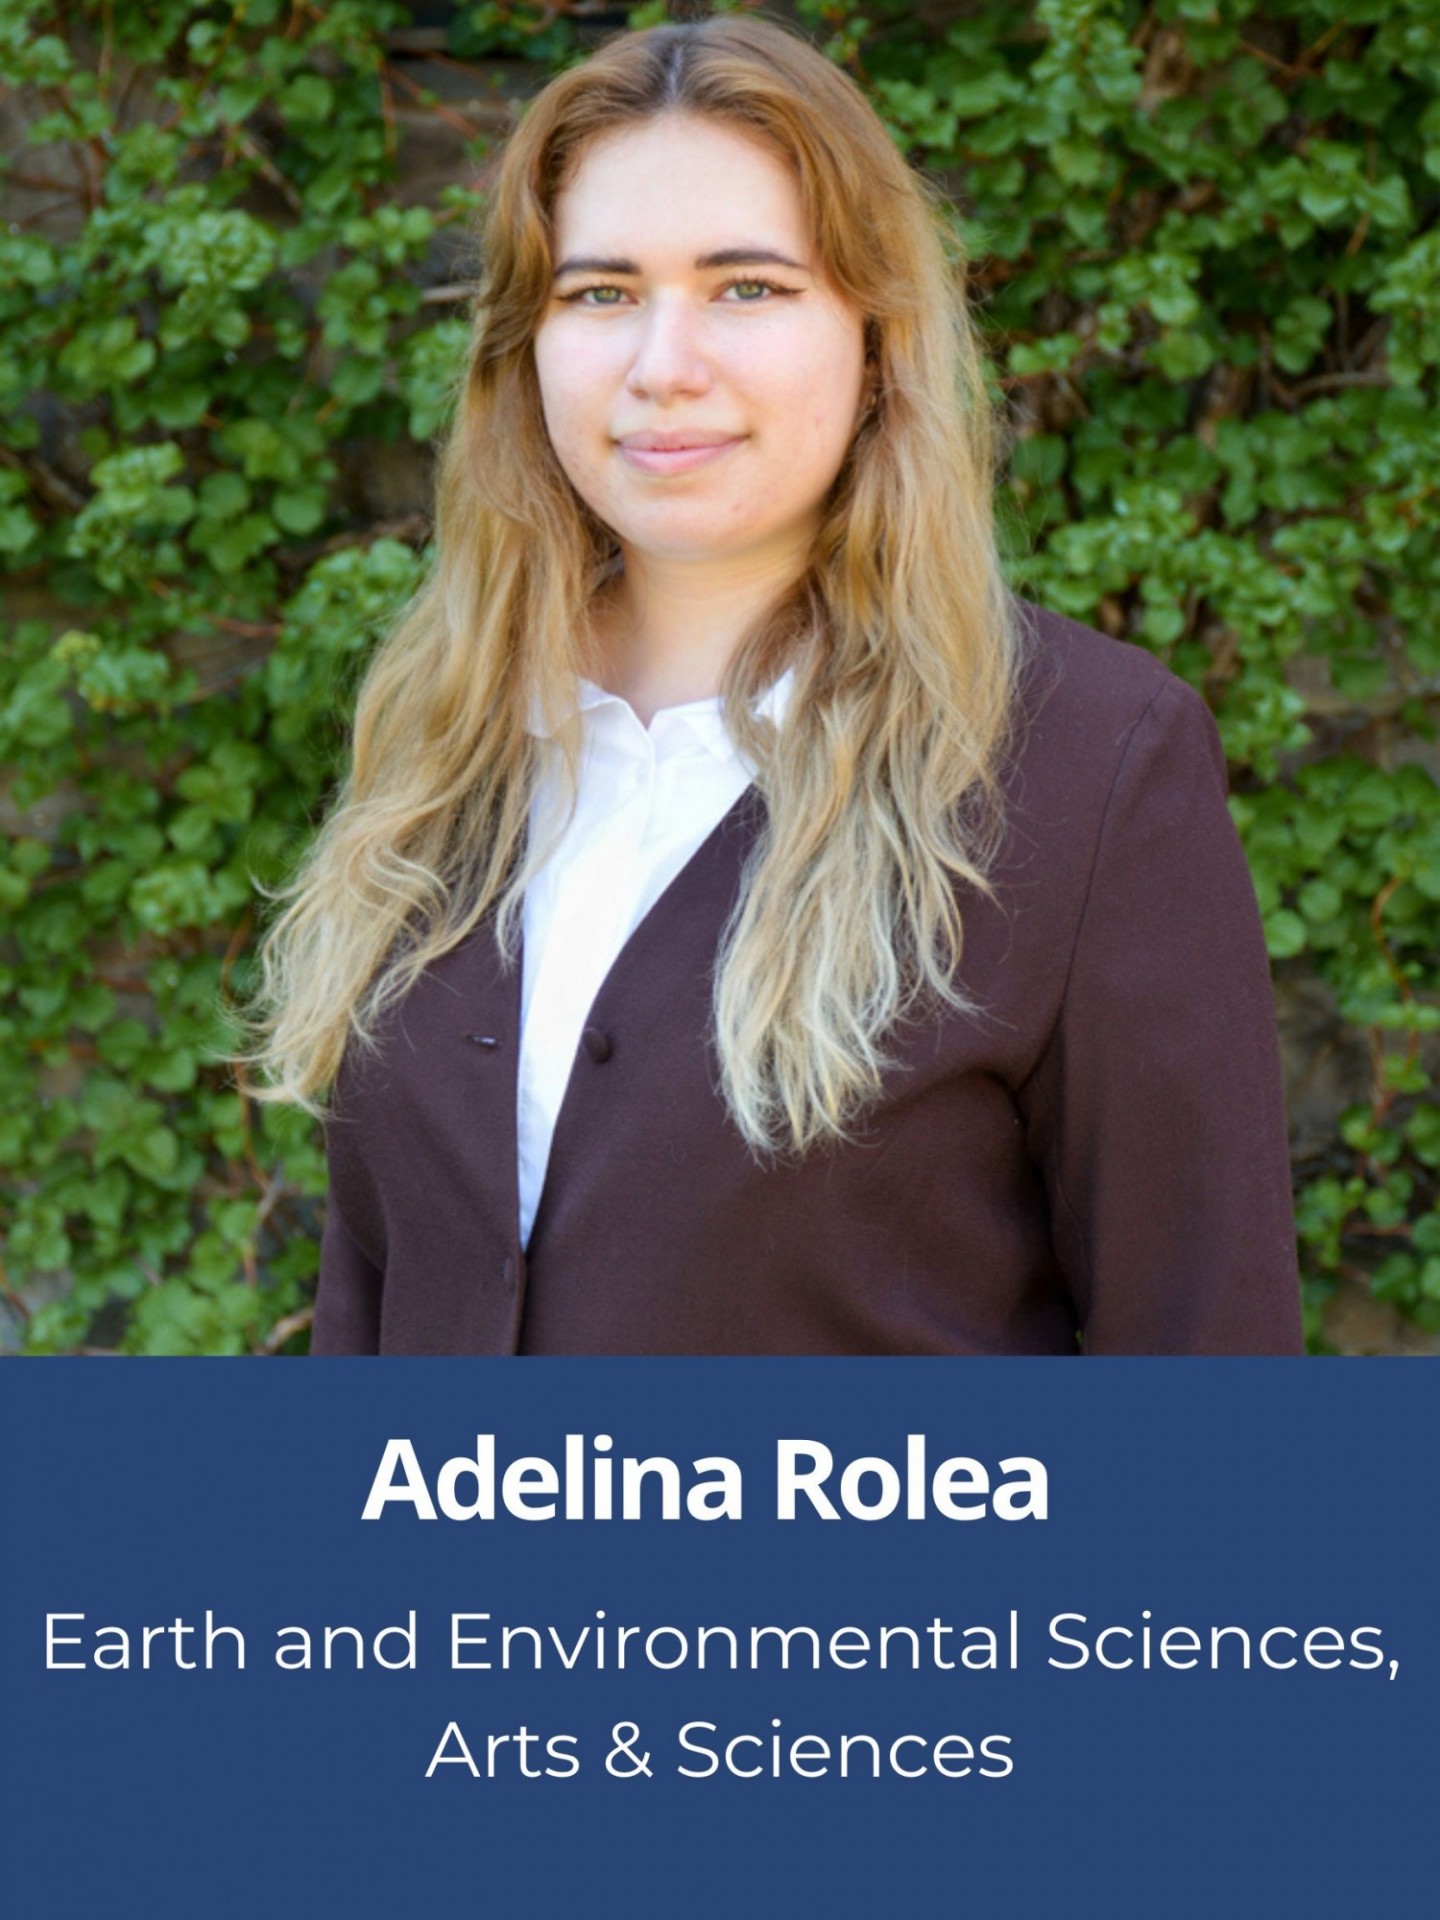 Headshot of Adelina Rolea with her name underneath